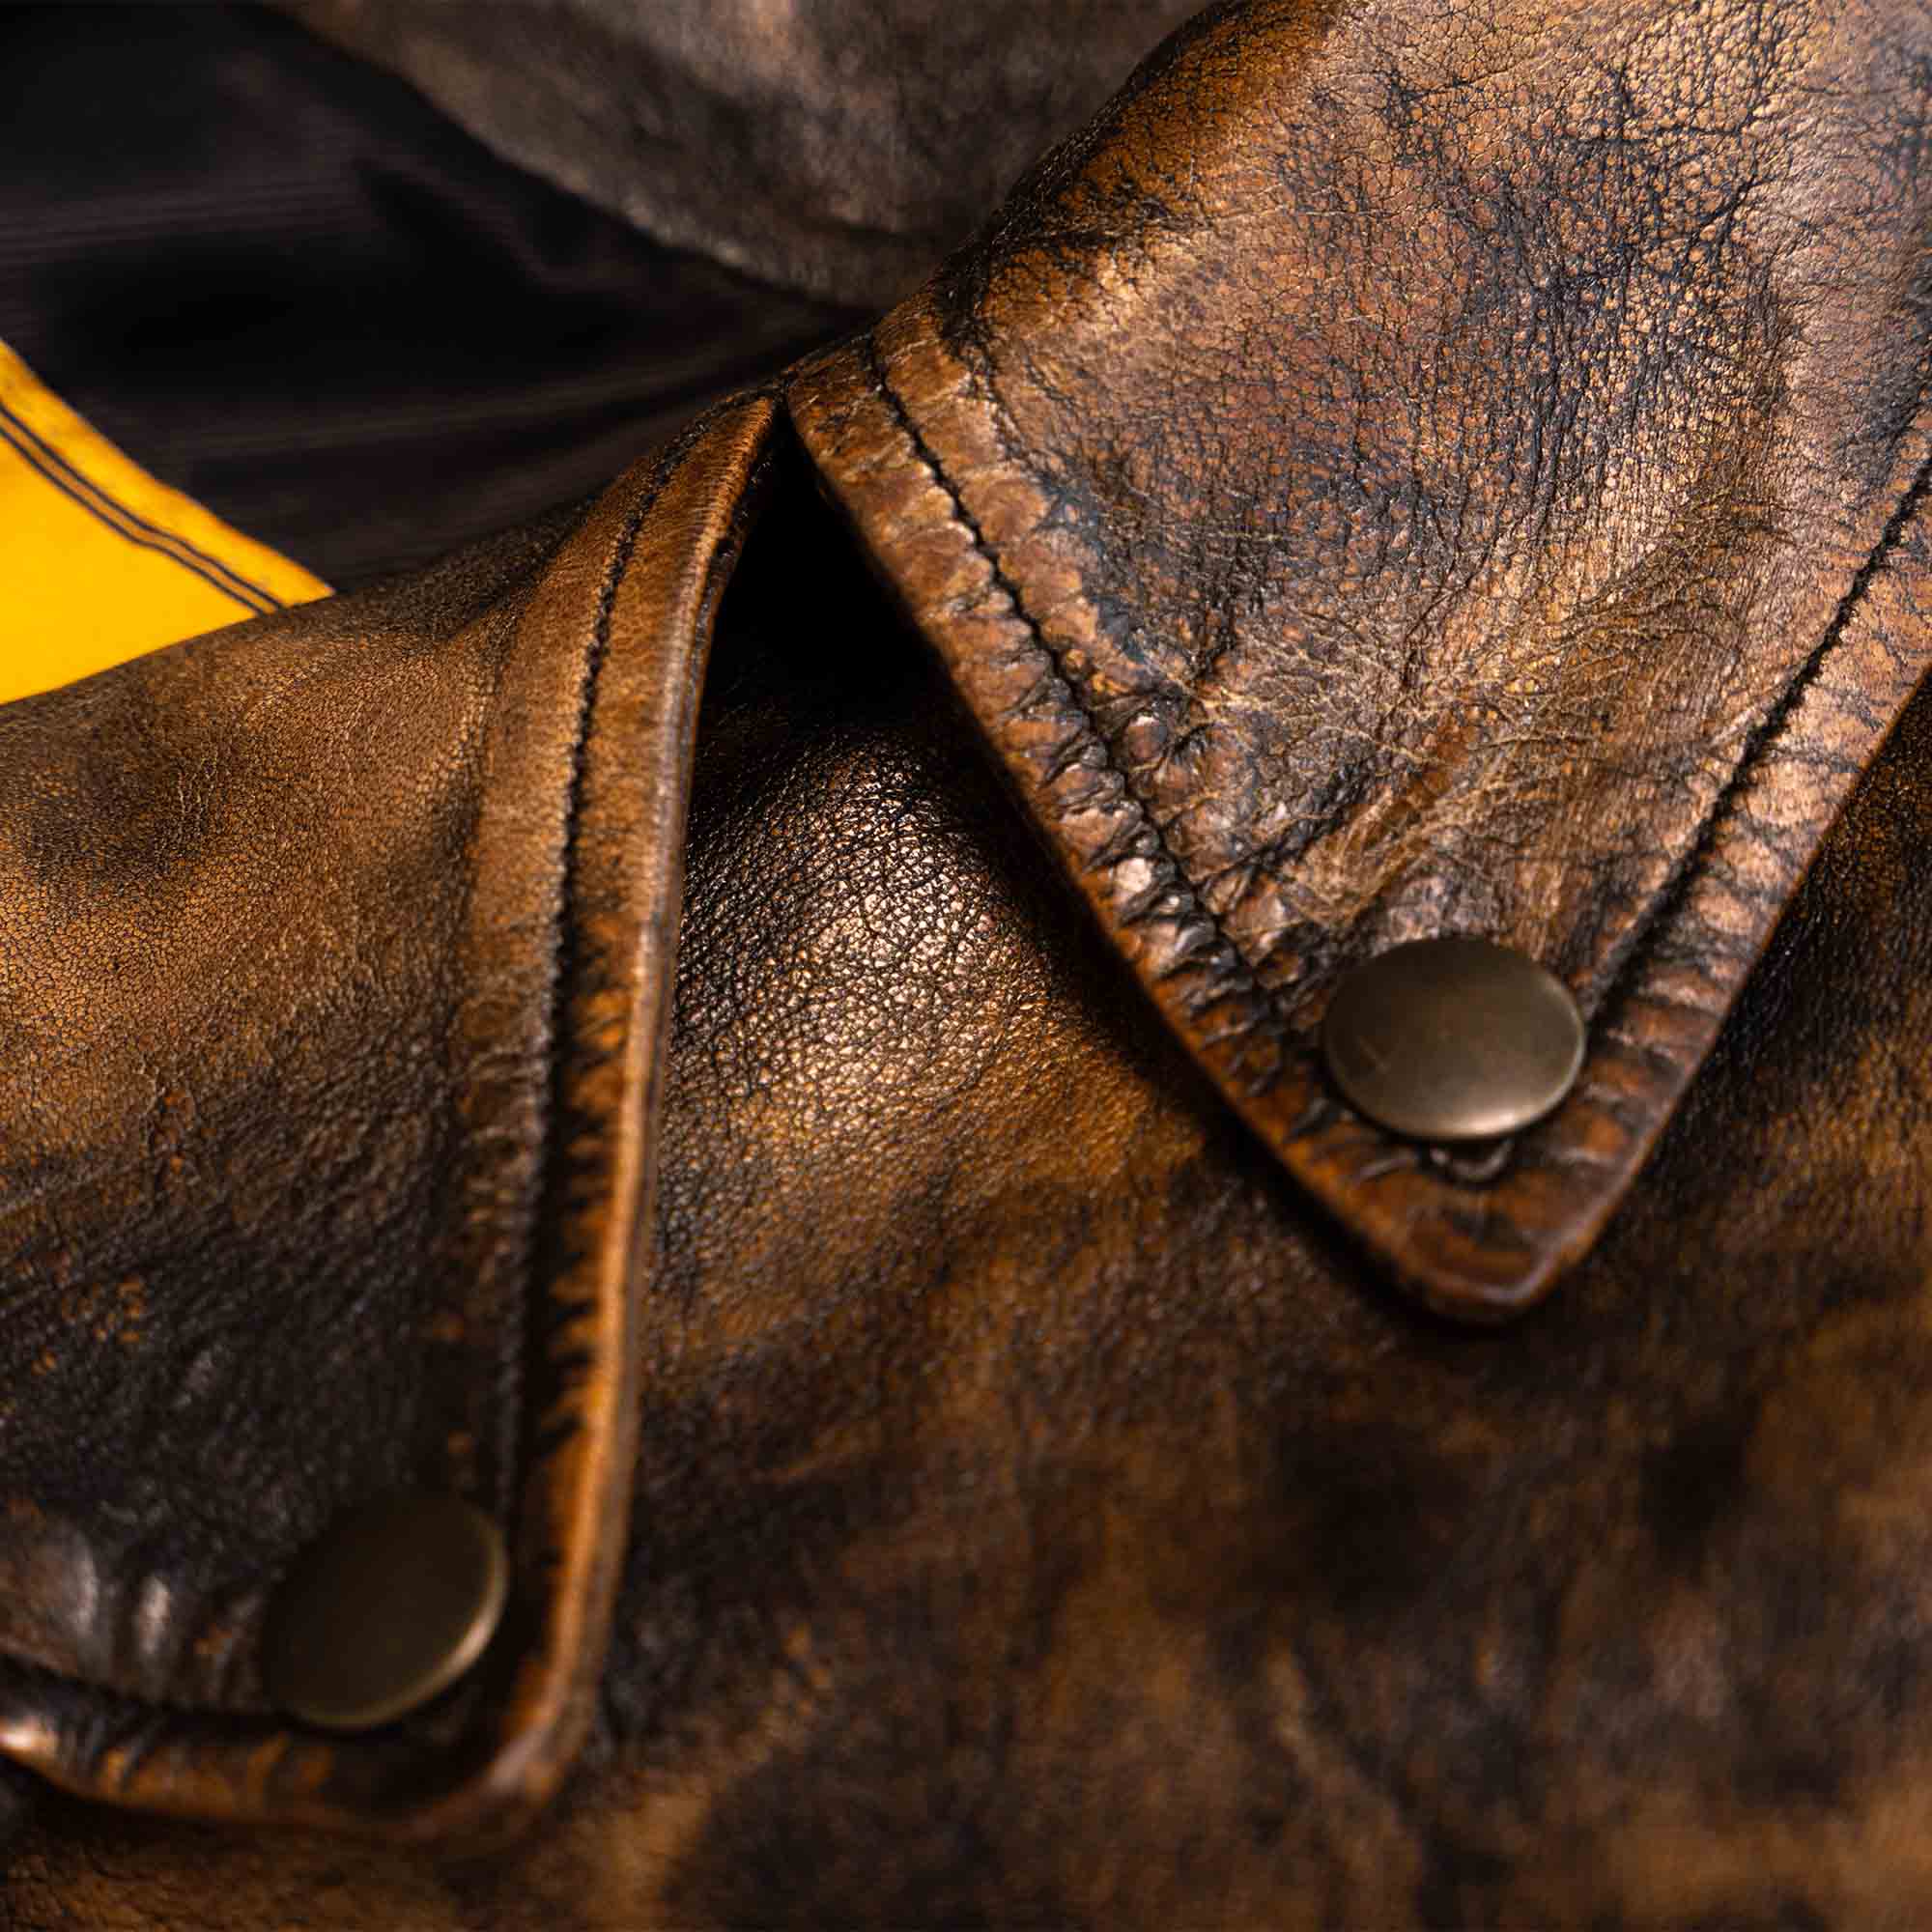 "Chiodo" Deserto Leather Jacket